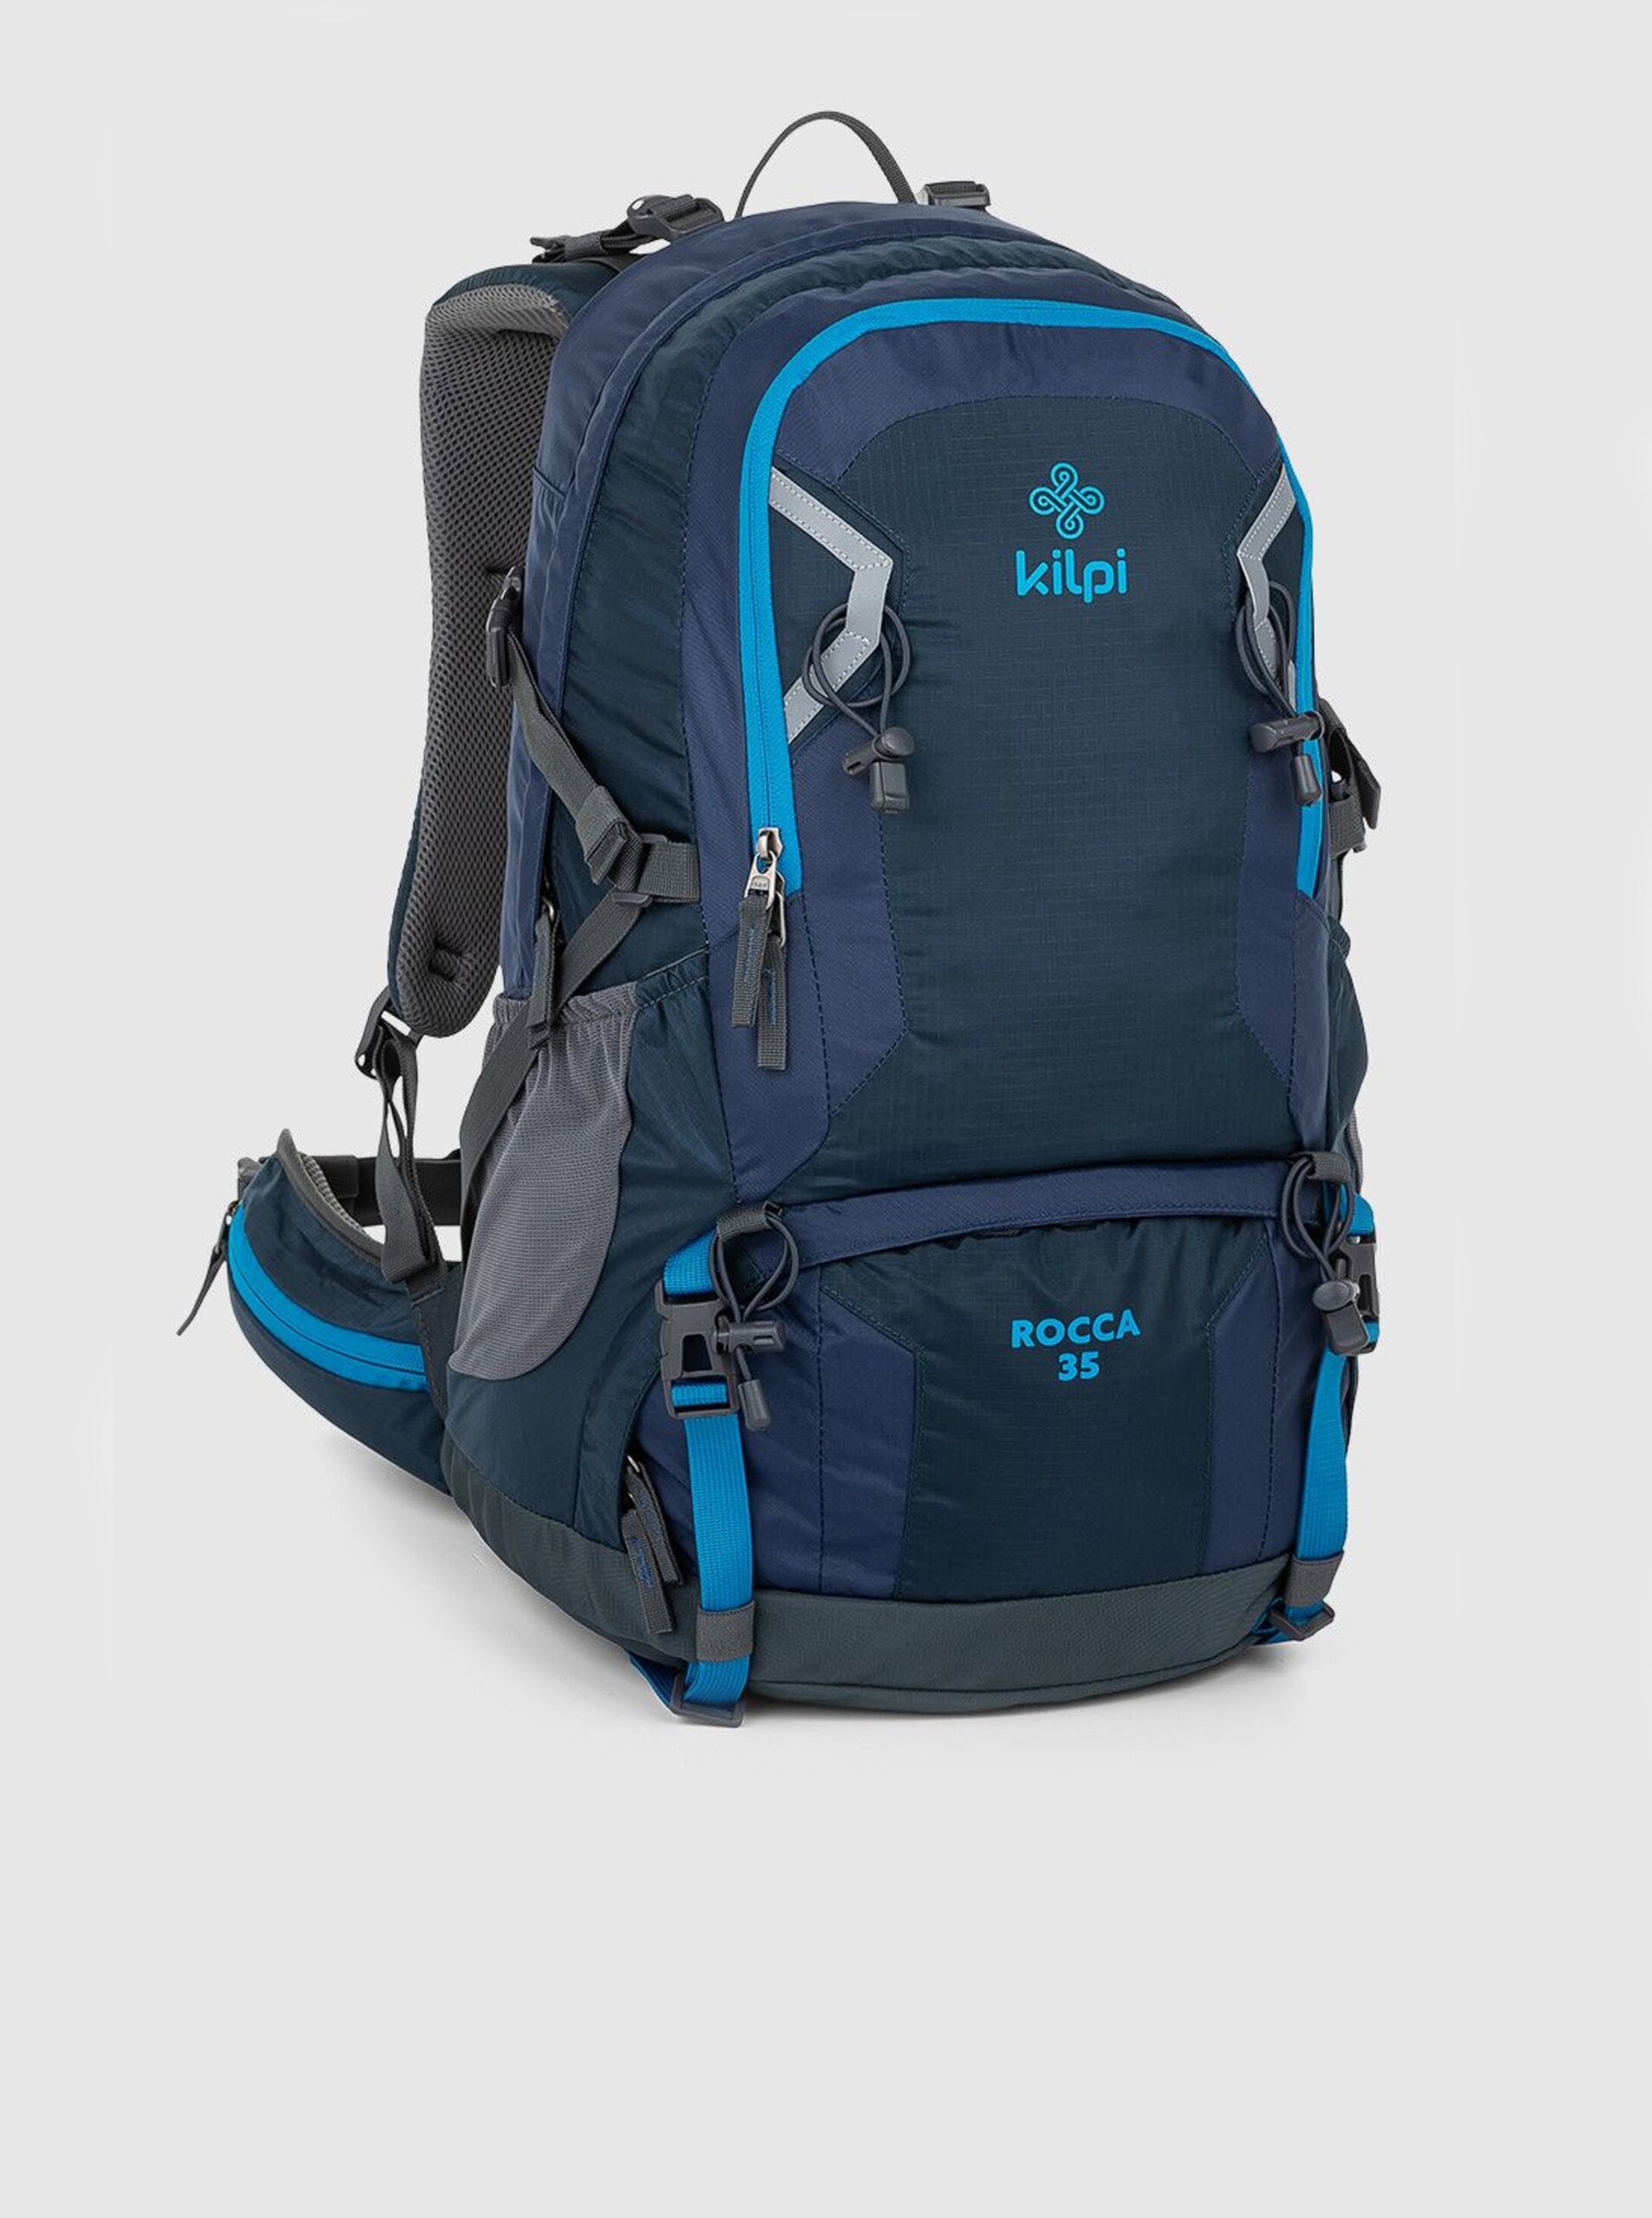 Lacno Tmavomodrý unisex športový ruksak Kilpi ROCCA (35 l)